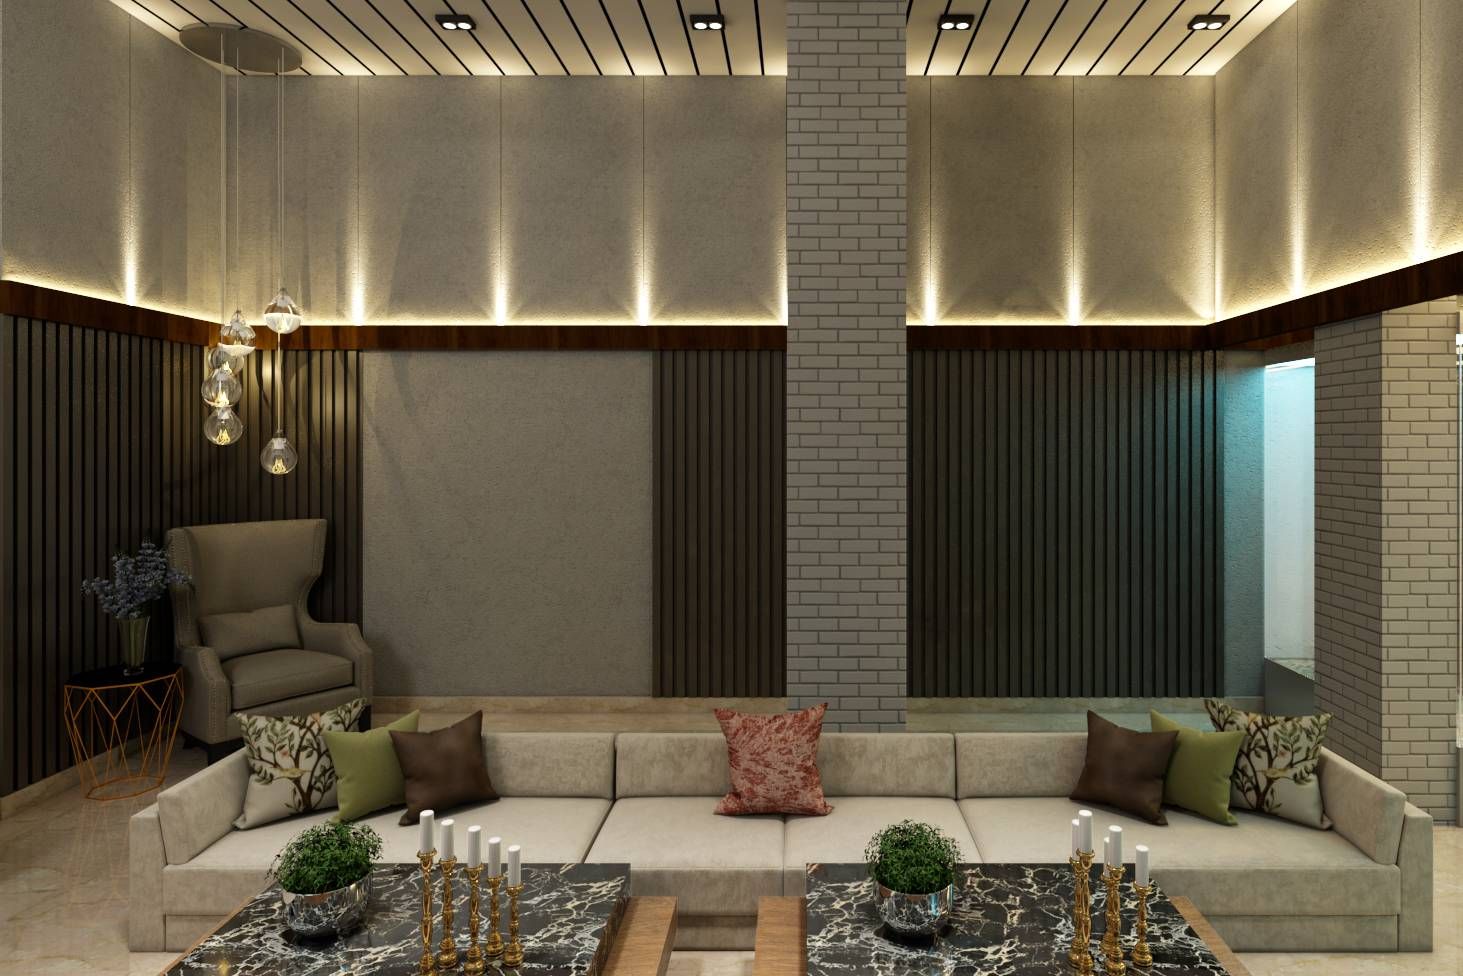 Charming Spacious Living Room With Contemporary Interior Design